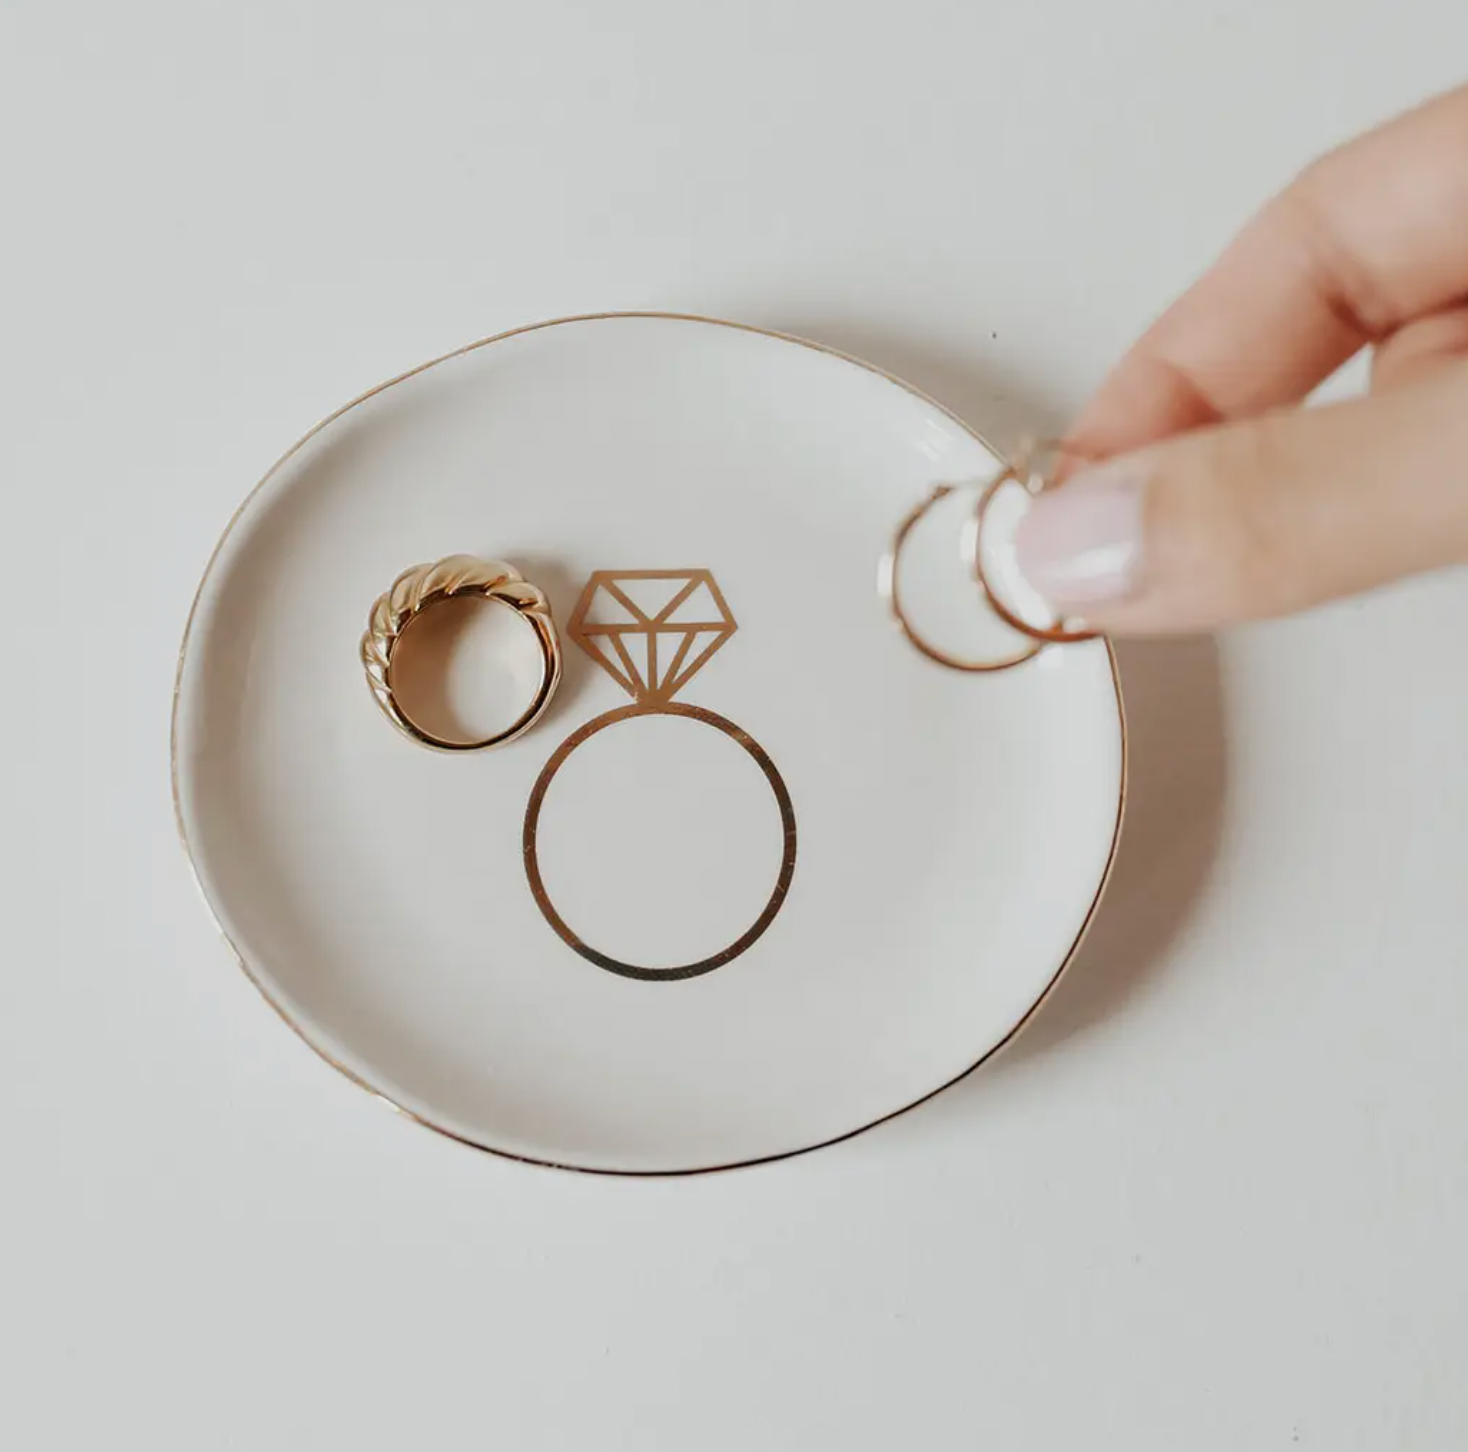 Engagement Ring Dish